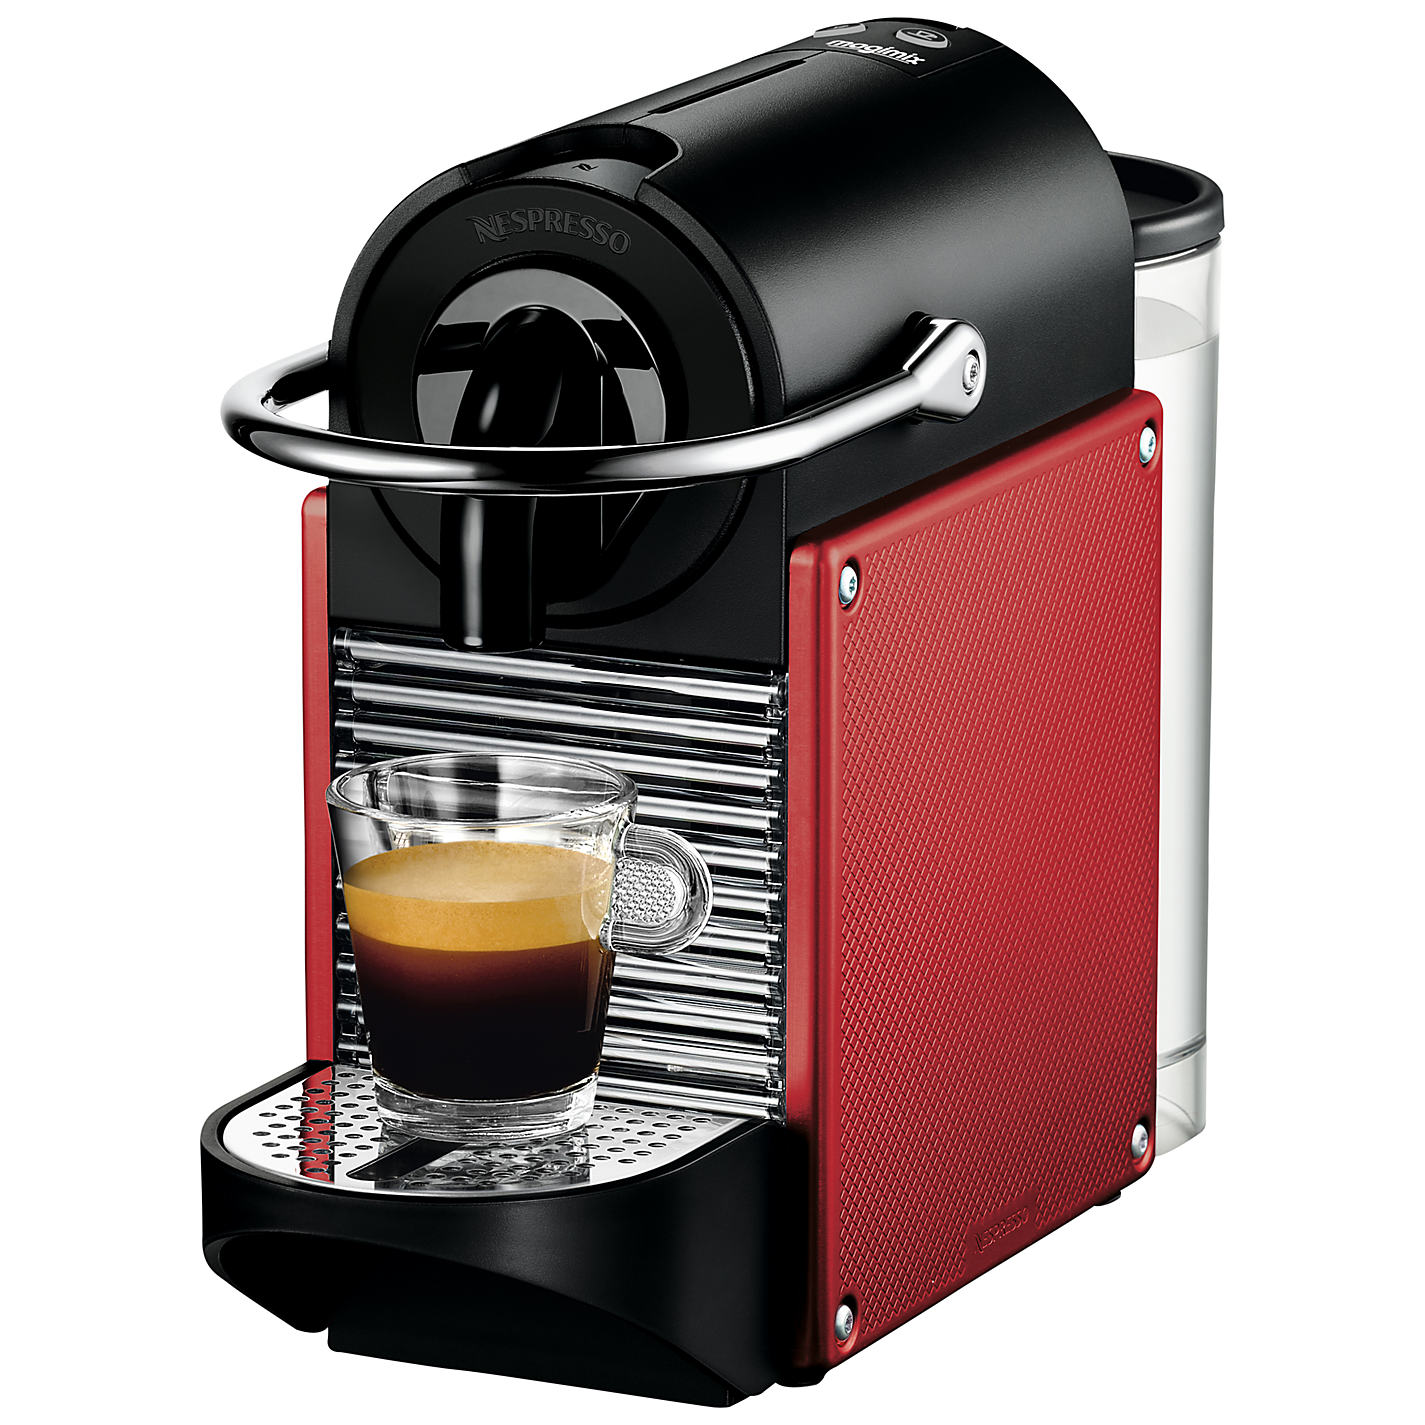 Buik Pech Sluier gastronommy.com: Alternative coffee pods for Nespresso machines